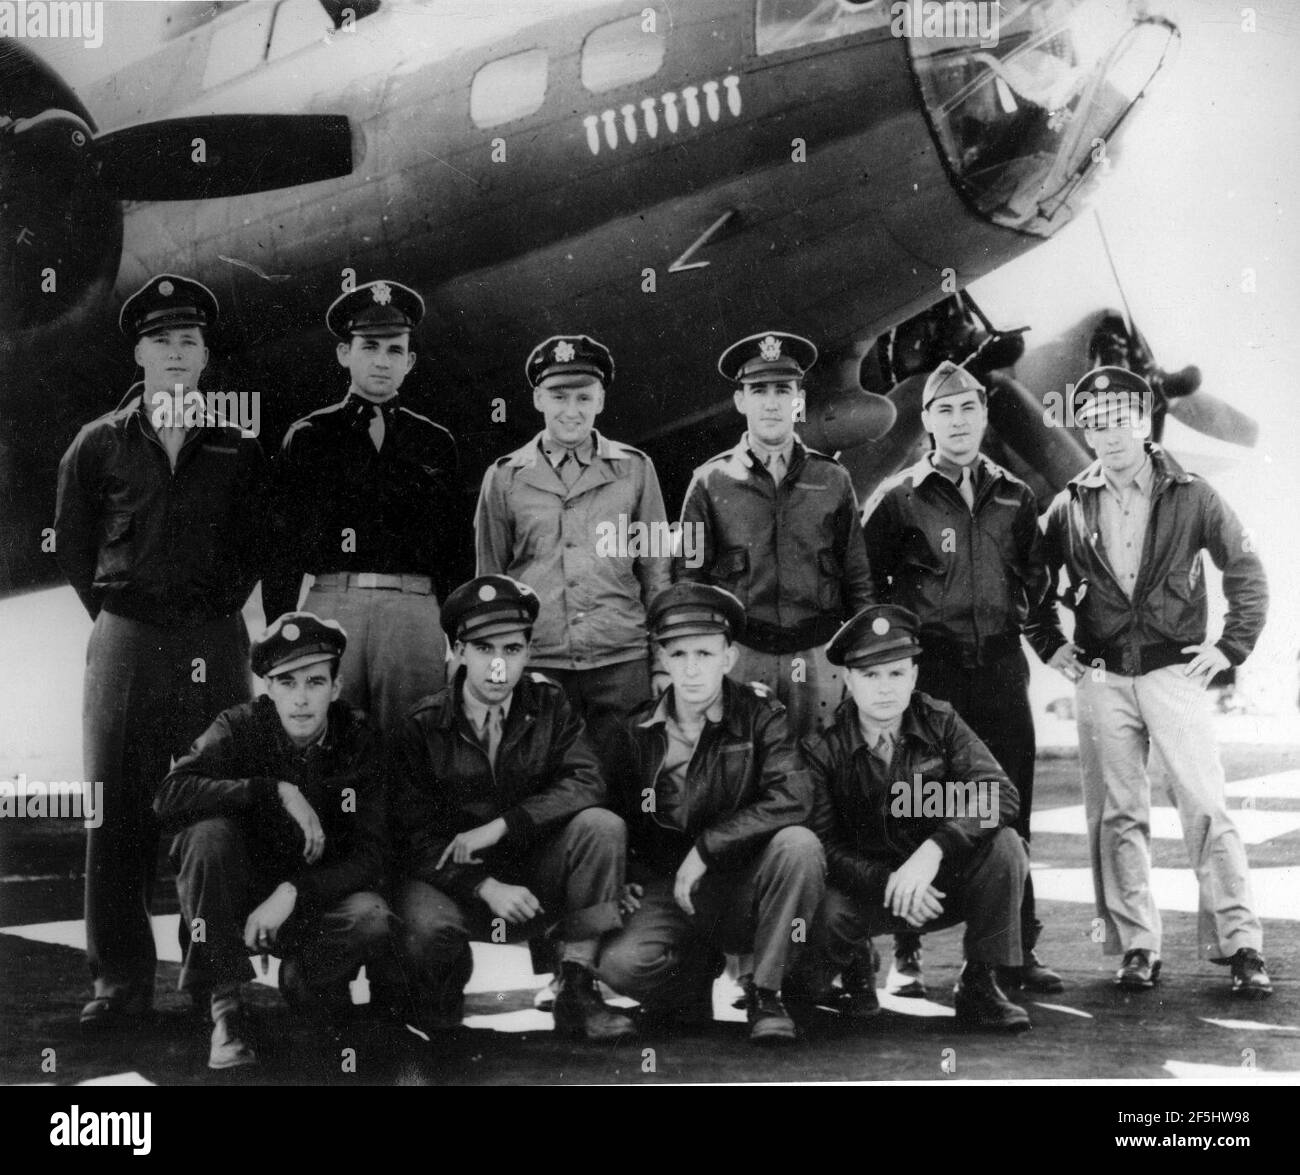 RAF Bury St Edmunds - Axis Hot Foot Crew Photo, 333rd Bomb Squadron, 94th Bombardment Group, RAF Bury St Edmunds. Stock Photo